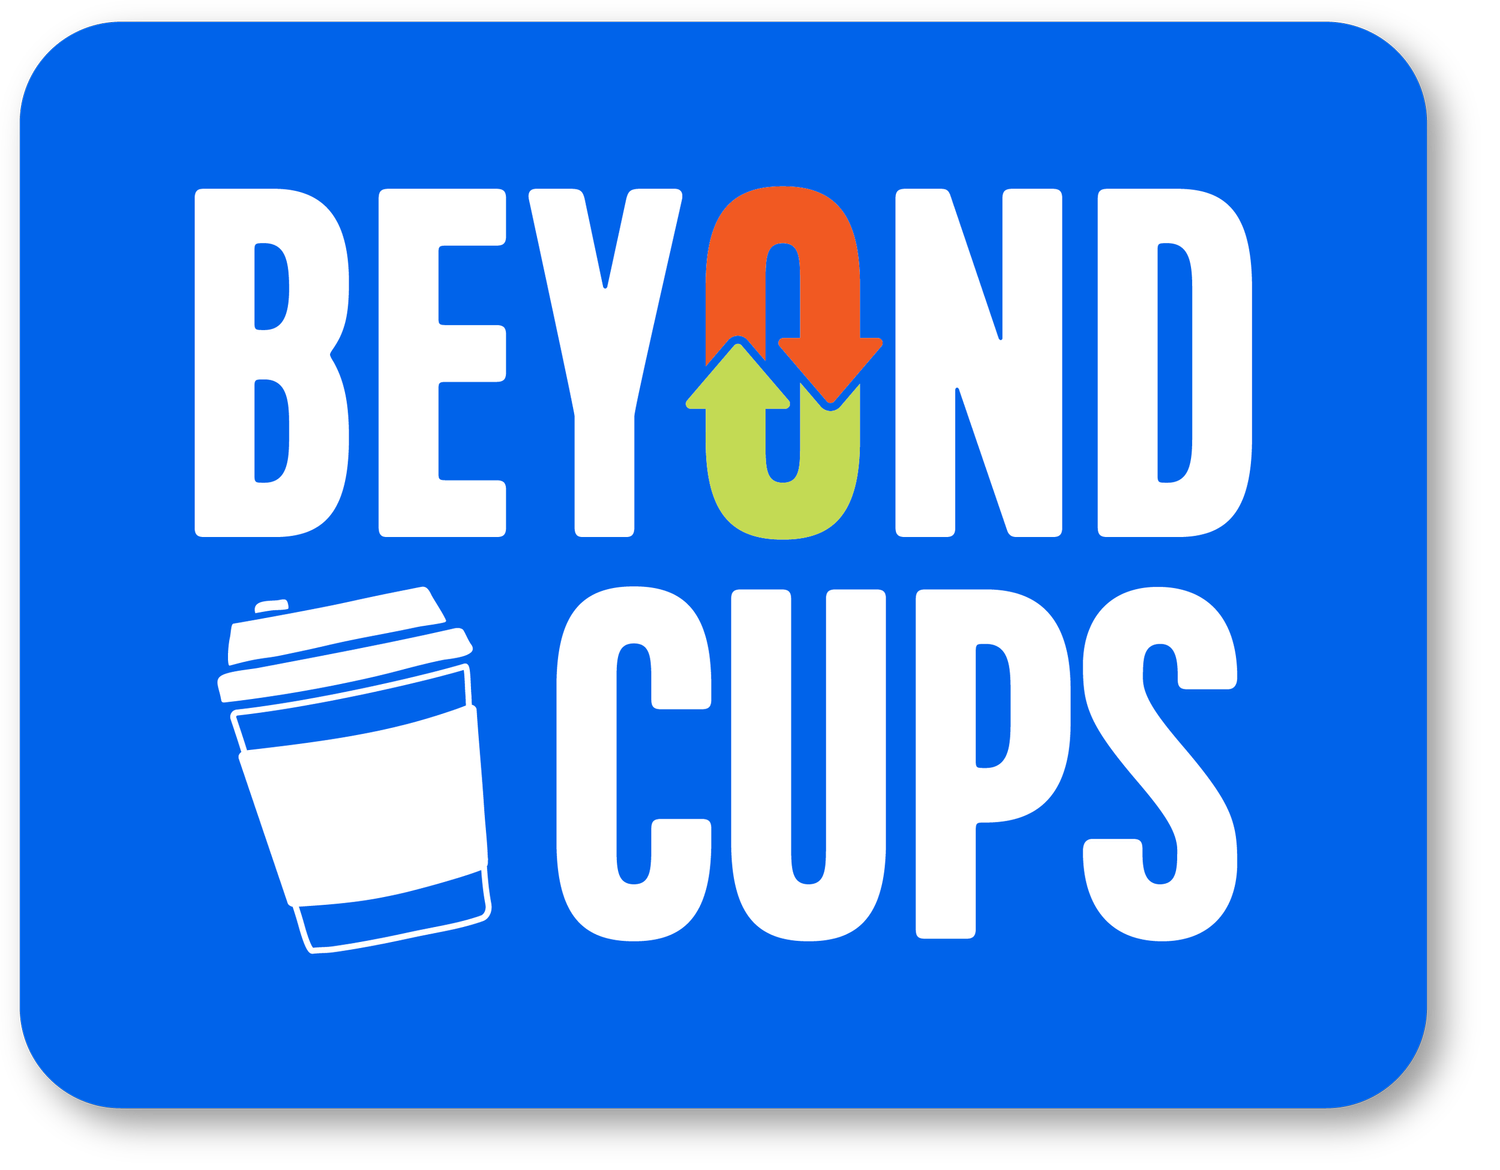 Beyond Cups